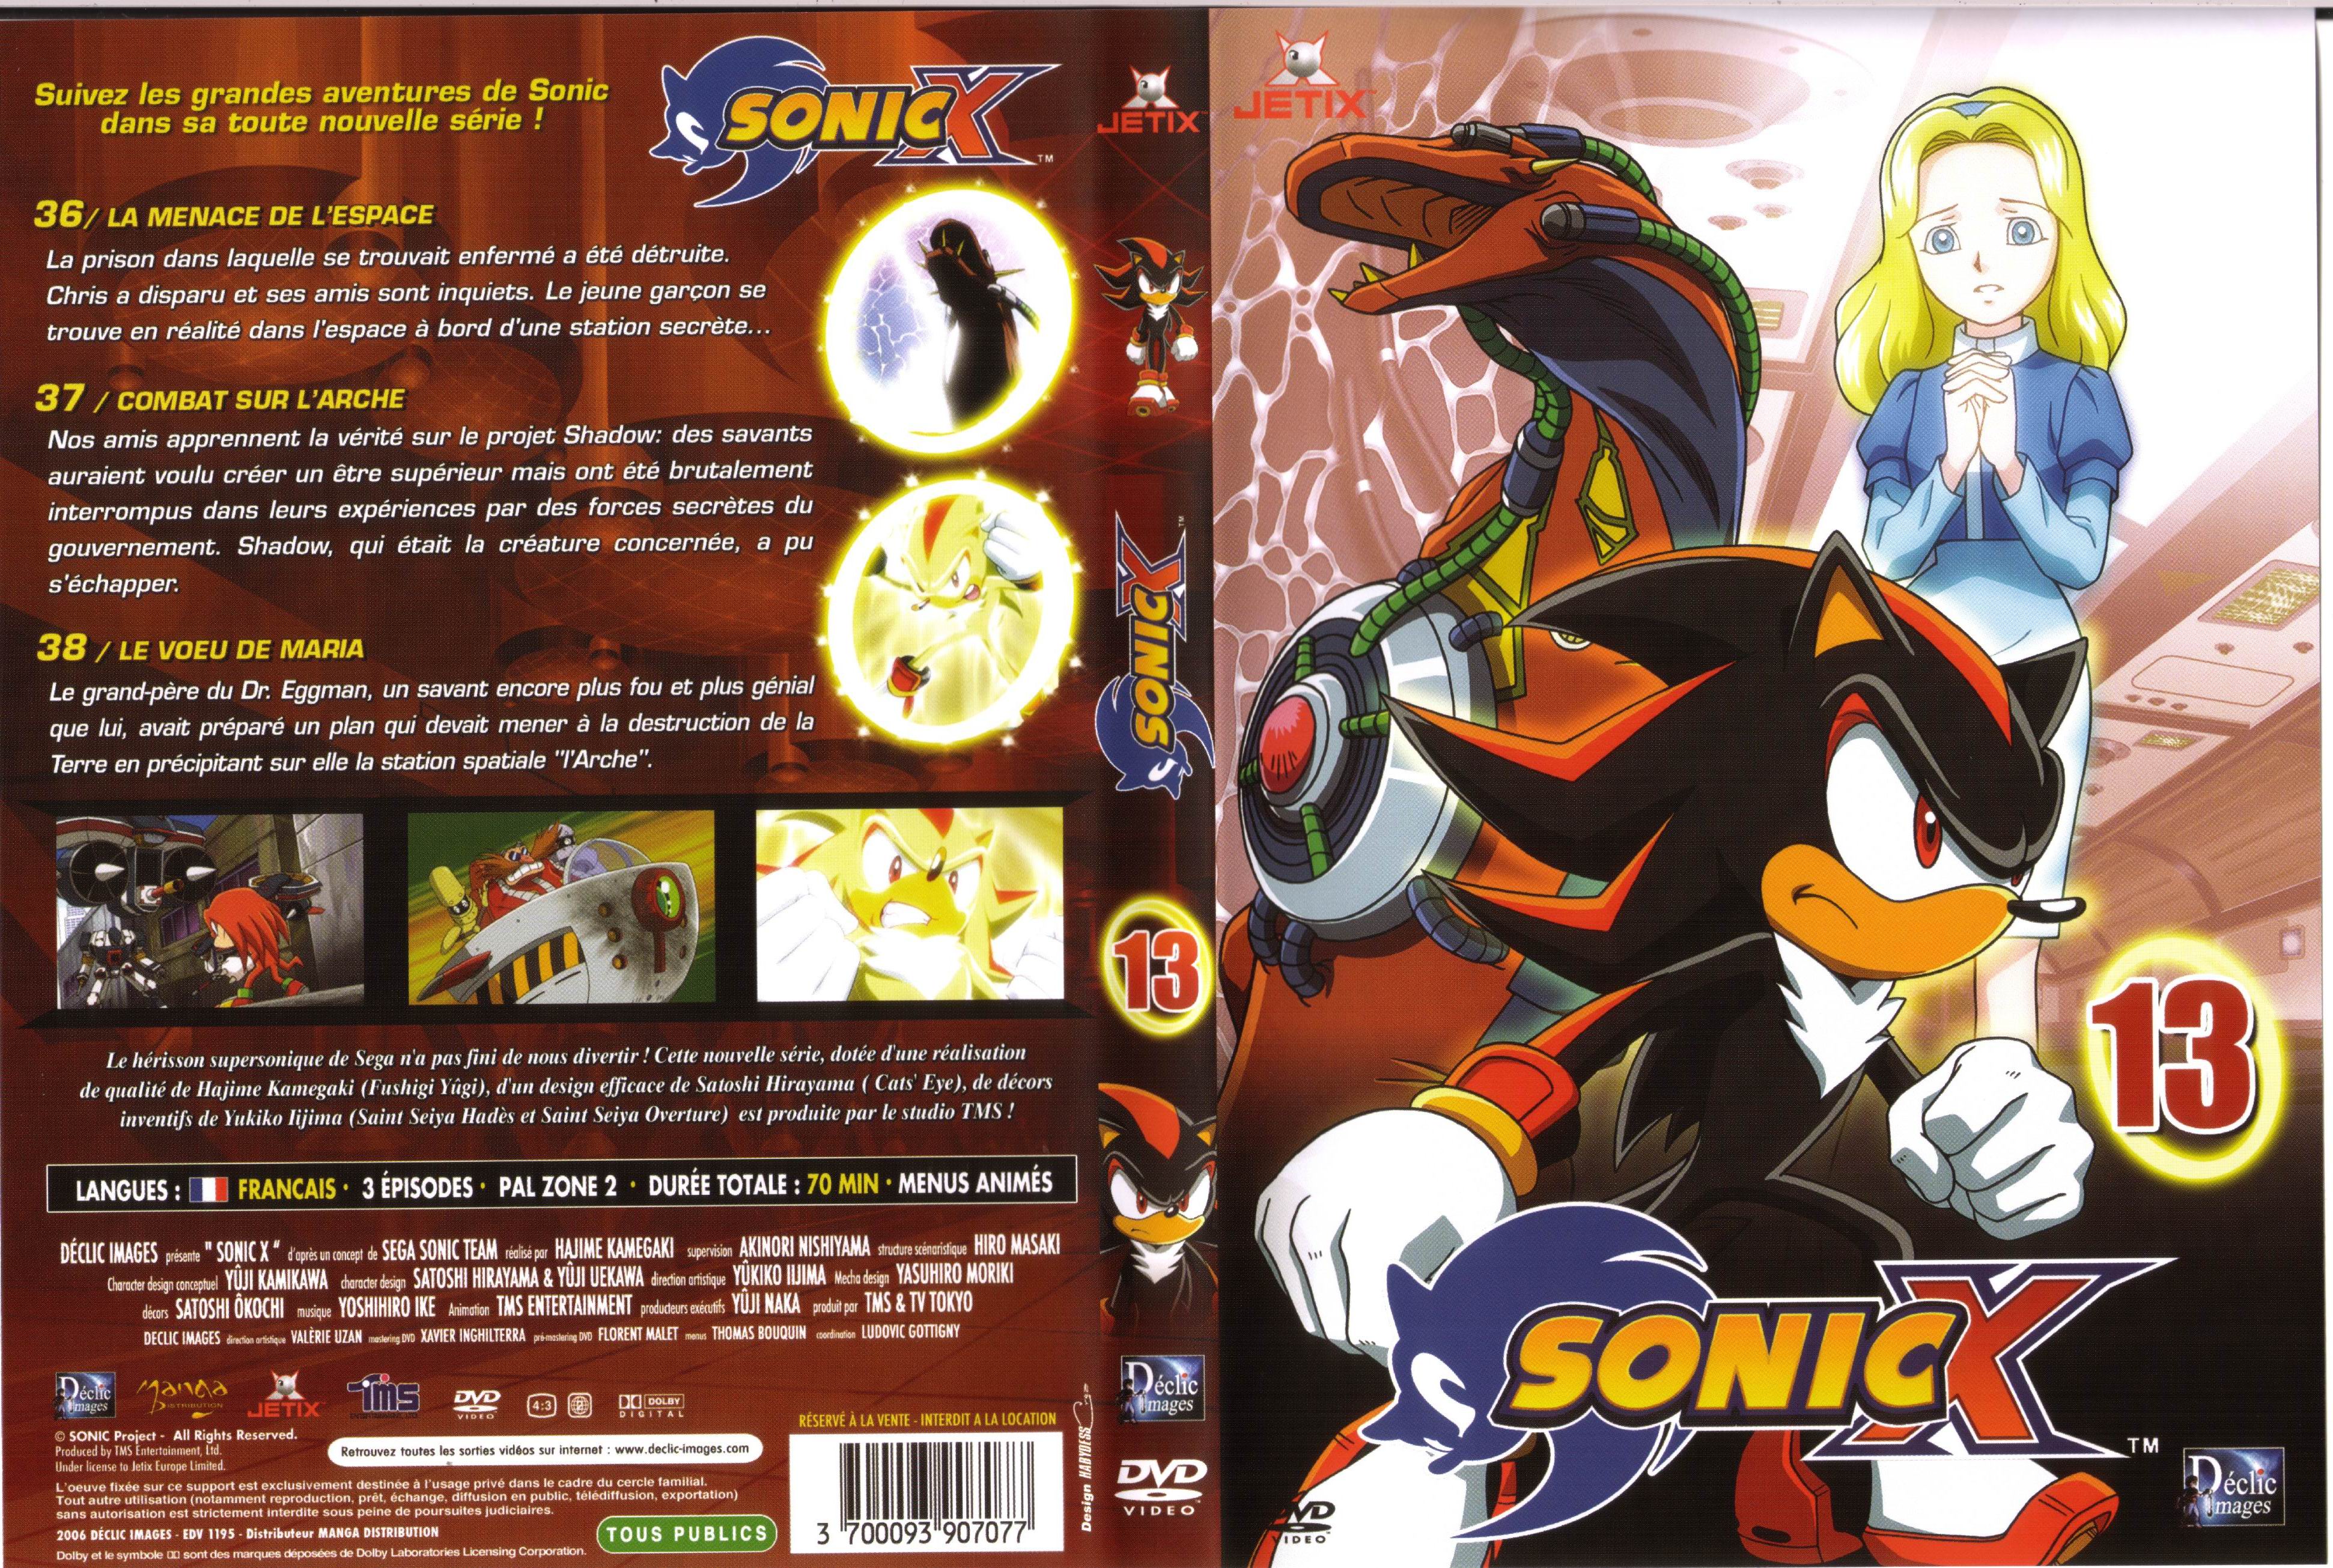 Jaquette DVD Sonic X vol 13